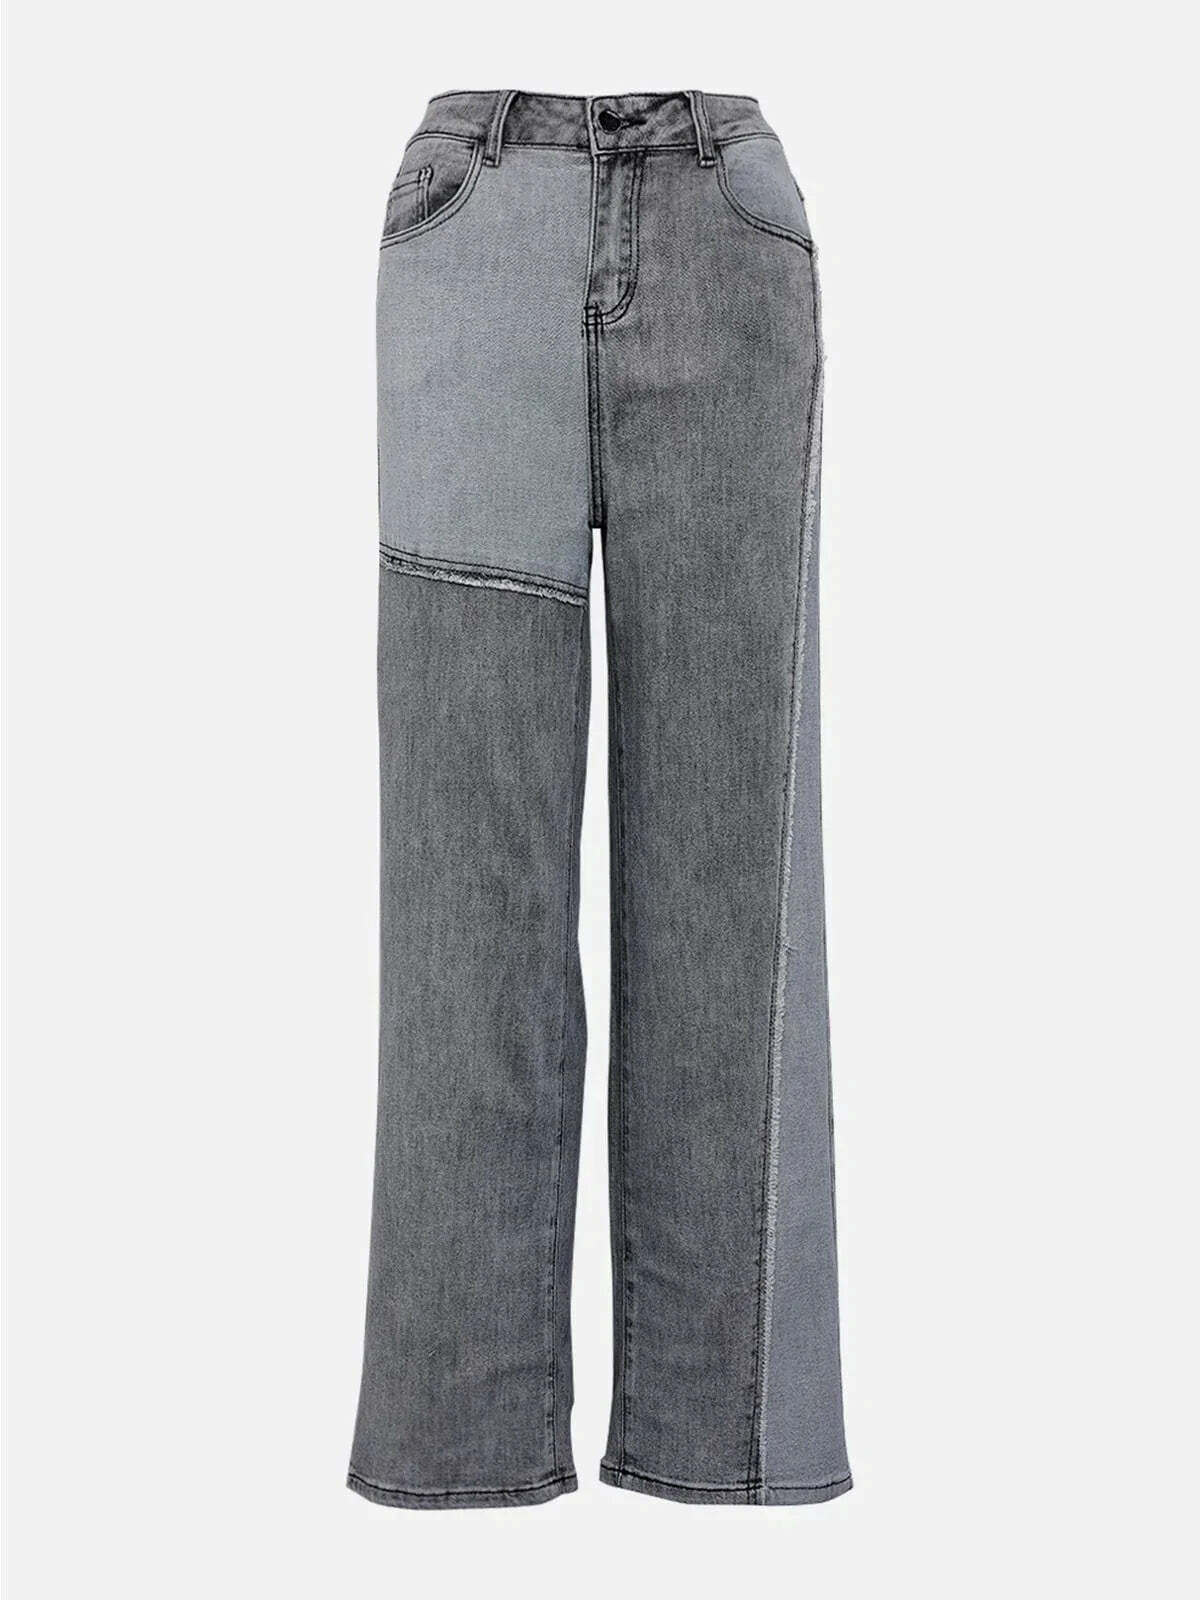 revolutionary patchwork jeans edgy & sleek streetwear 4160